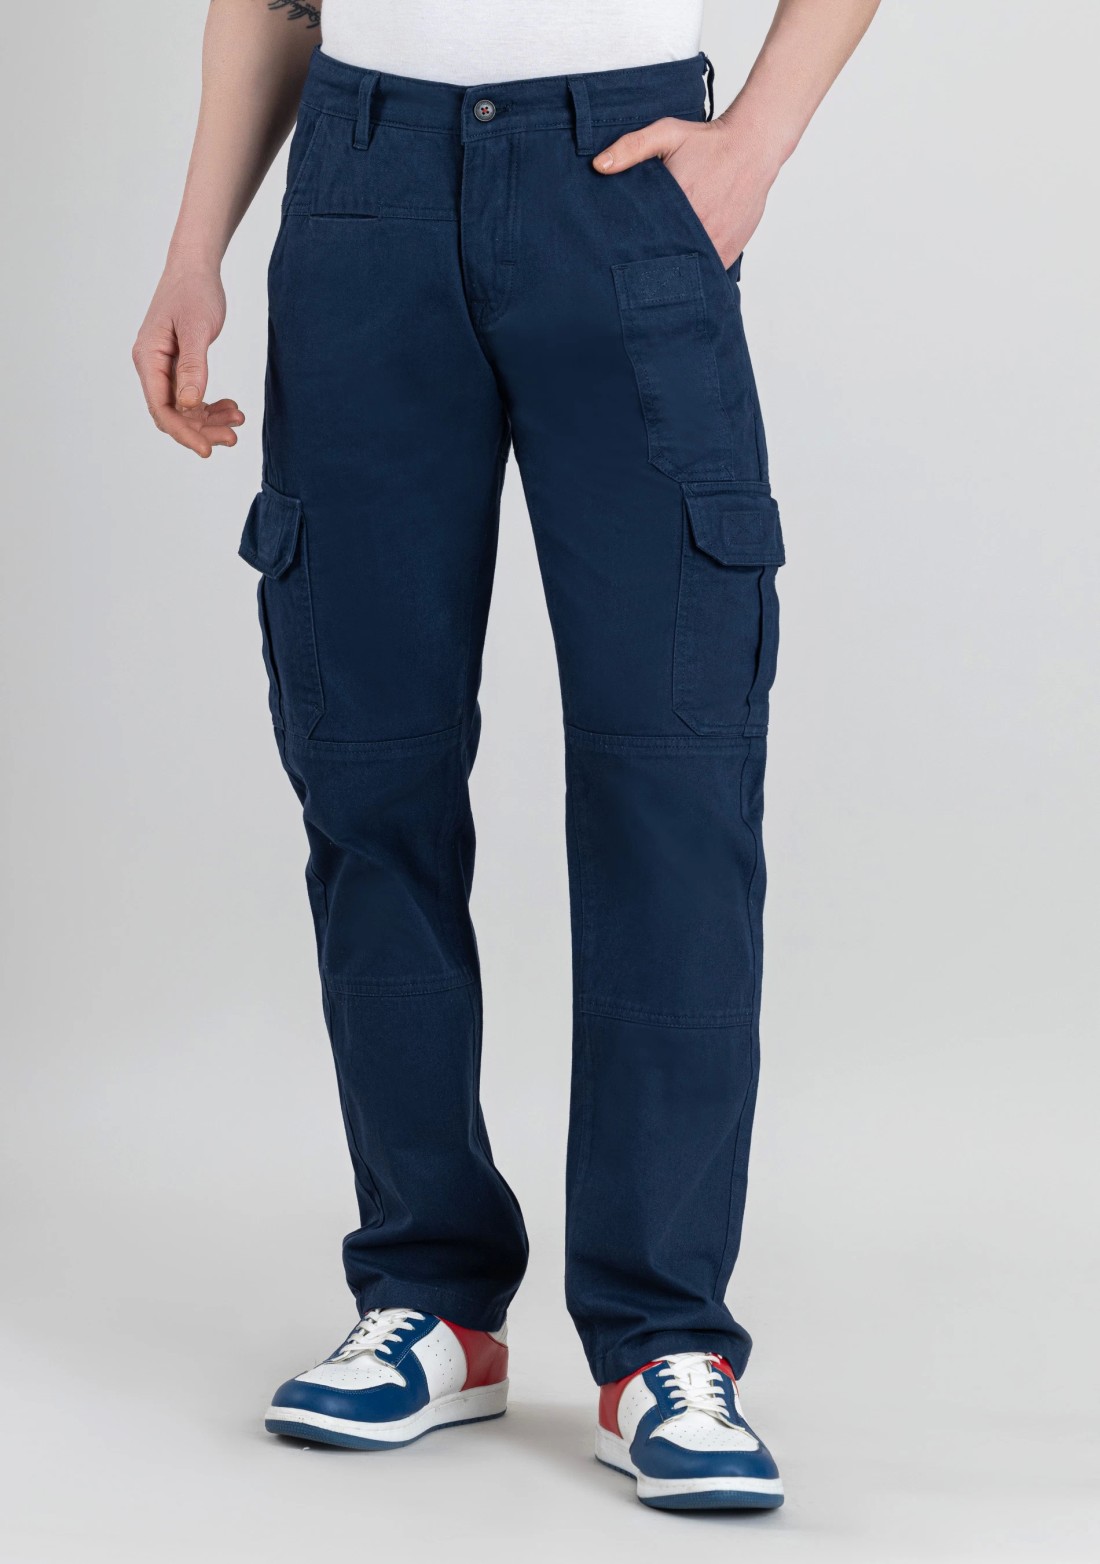 Feelin' Nauti Blue Cargo Pants | Blue cargo pants, Cargo pants outfit,  Olive green cargo pants